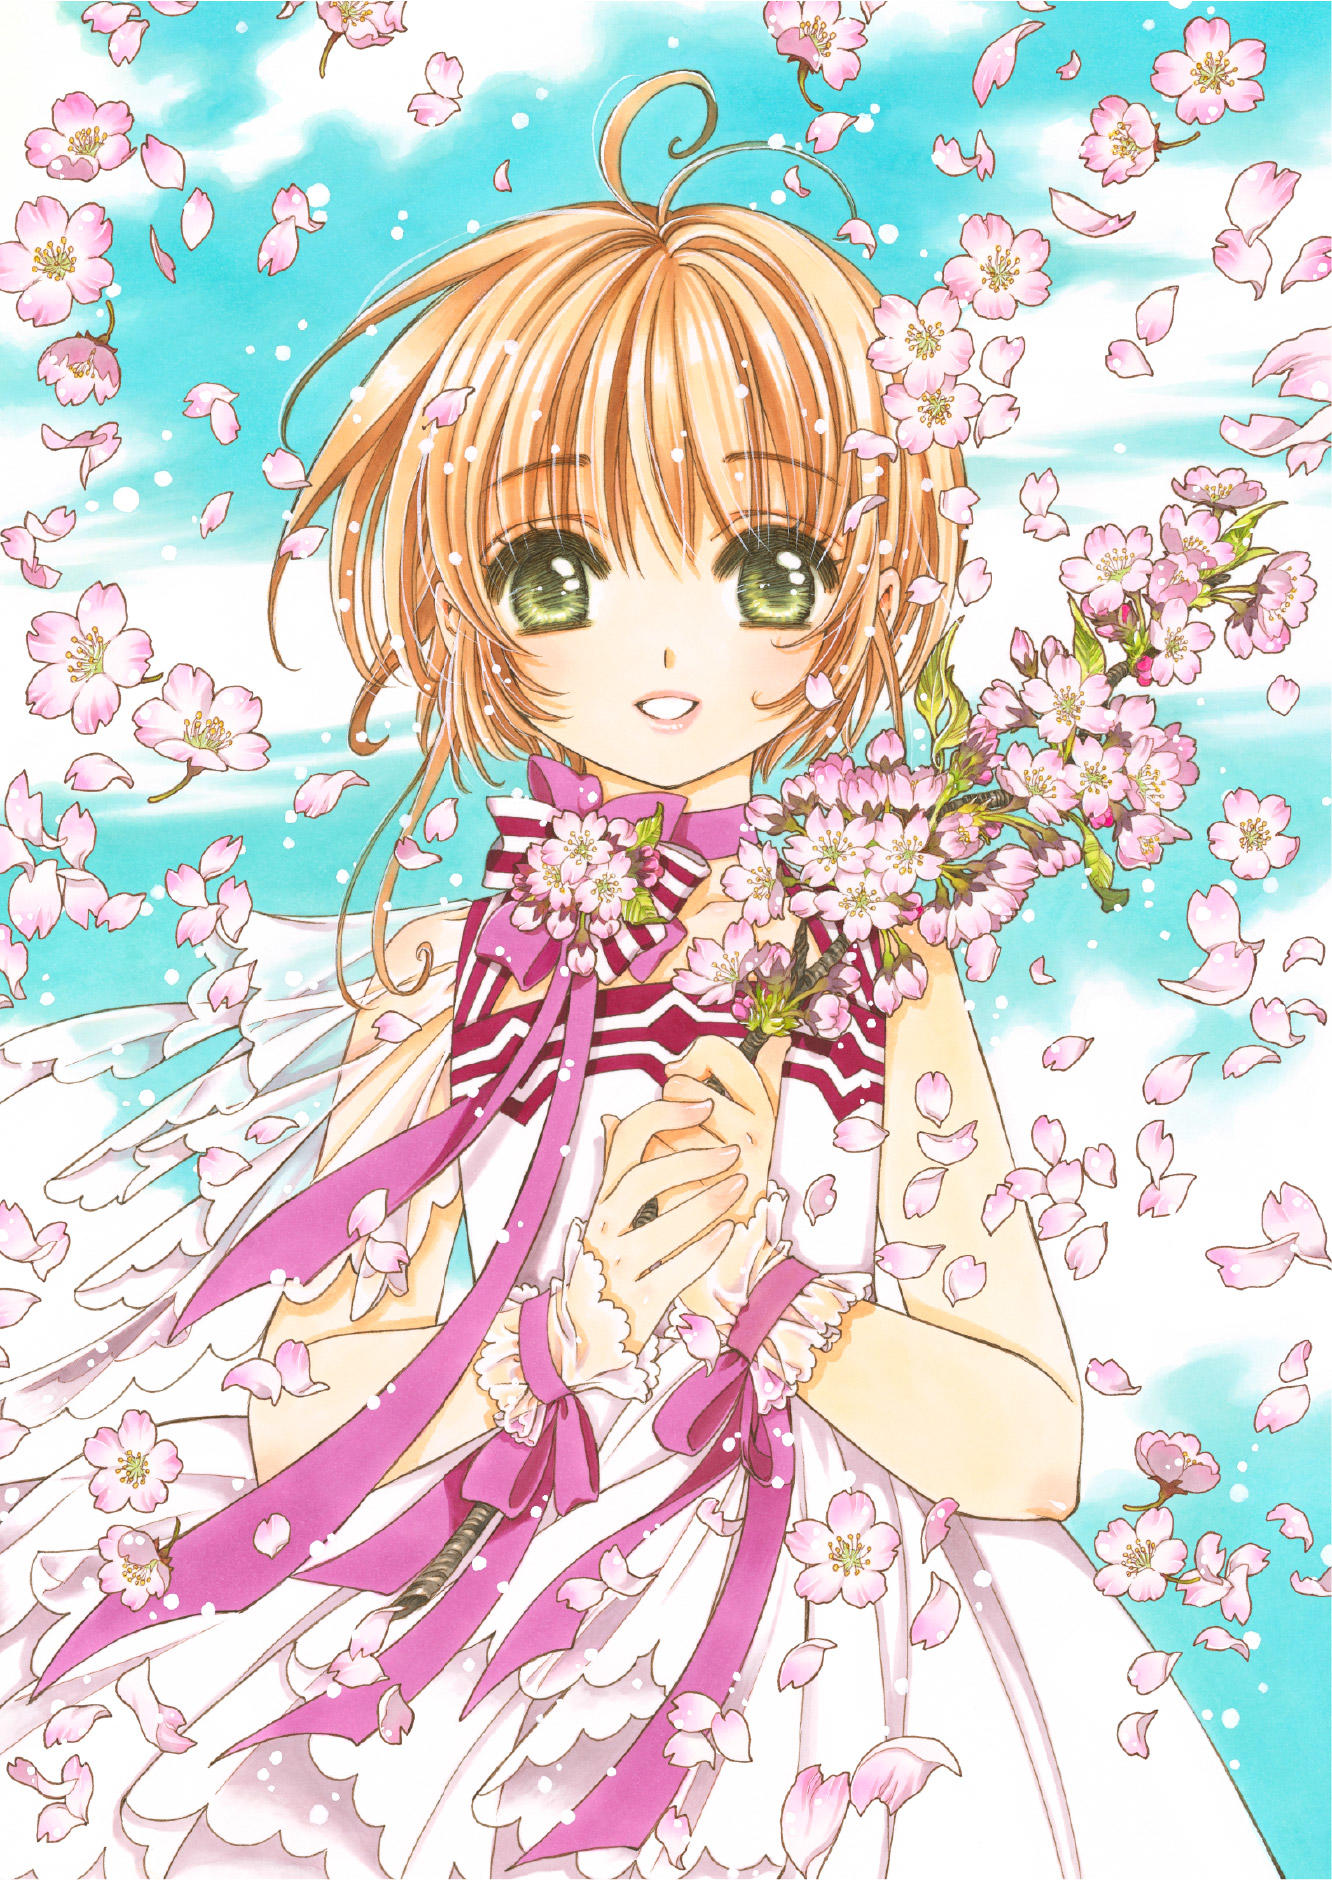 Anime] Sakura Card Captors – Apoliland